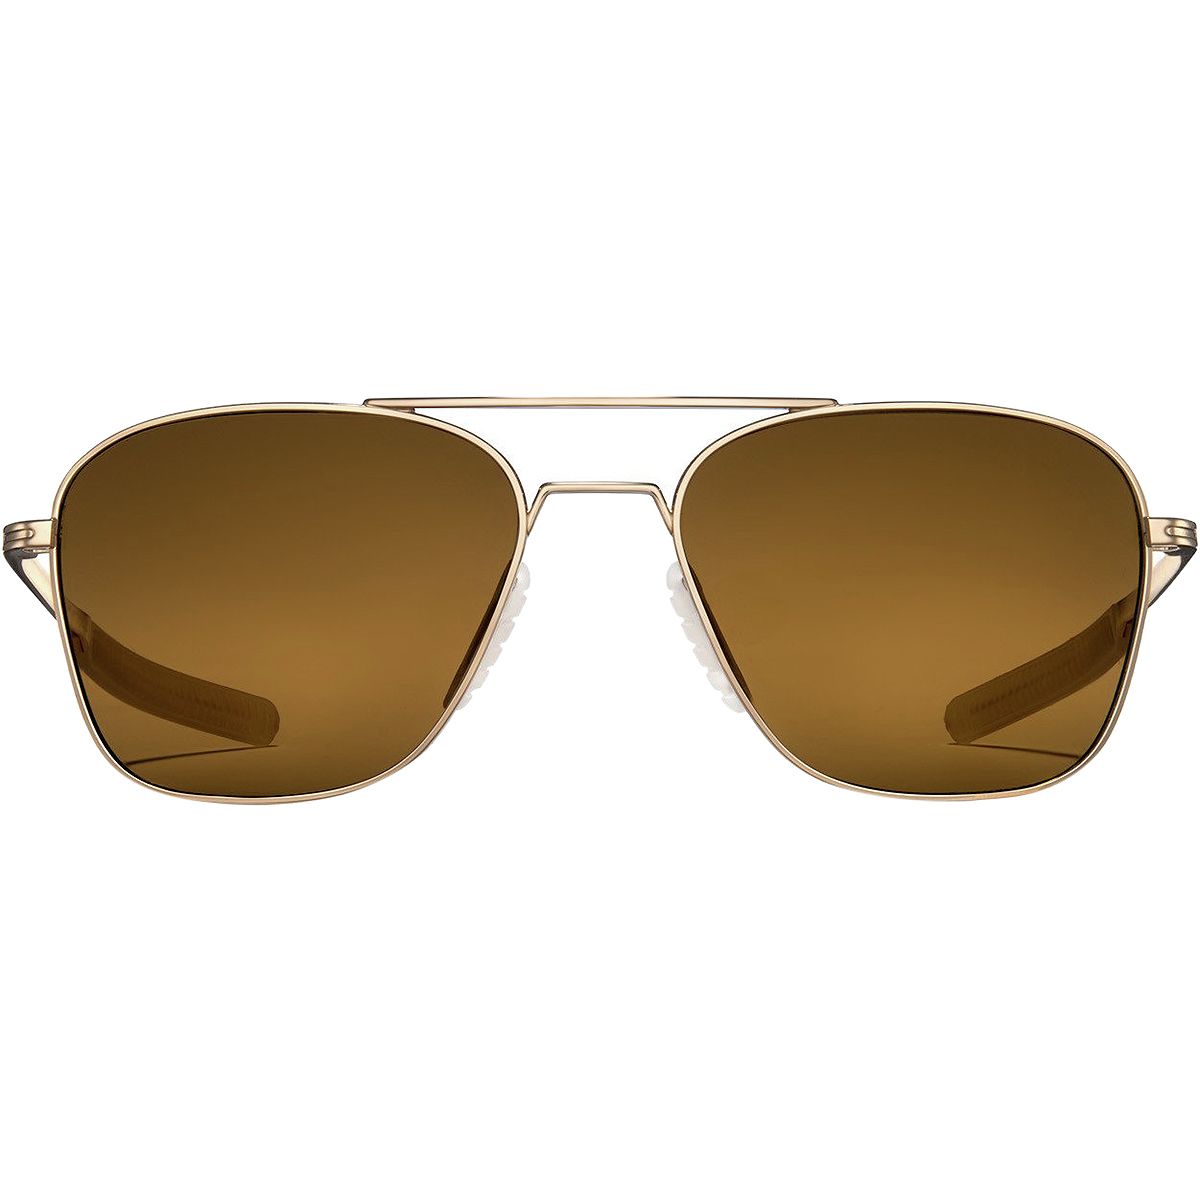 Roka Falcon Titanium Polarized Sunglasses - Men's